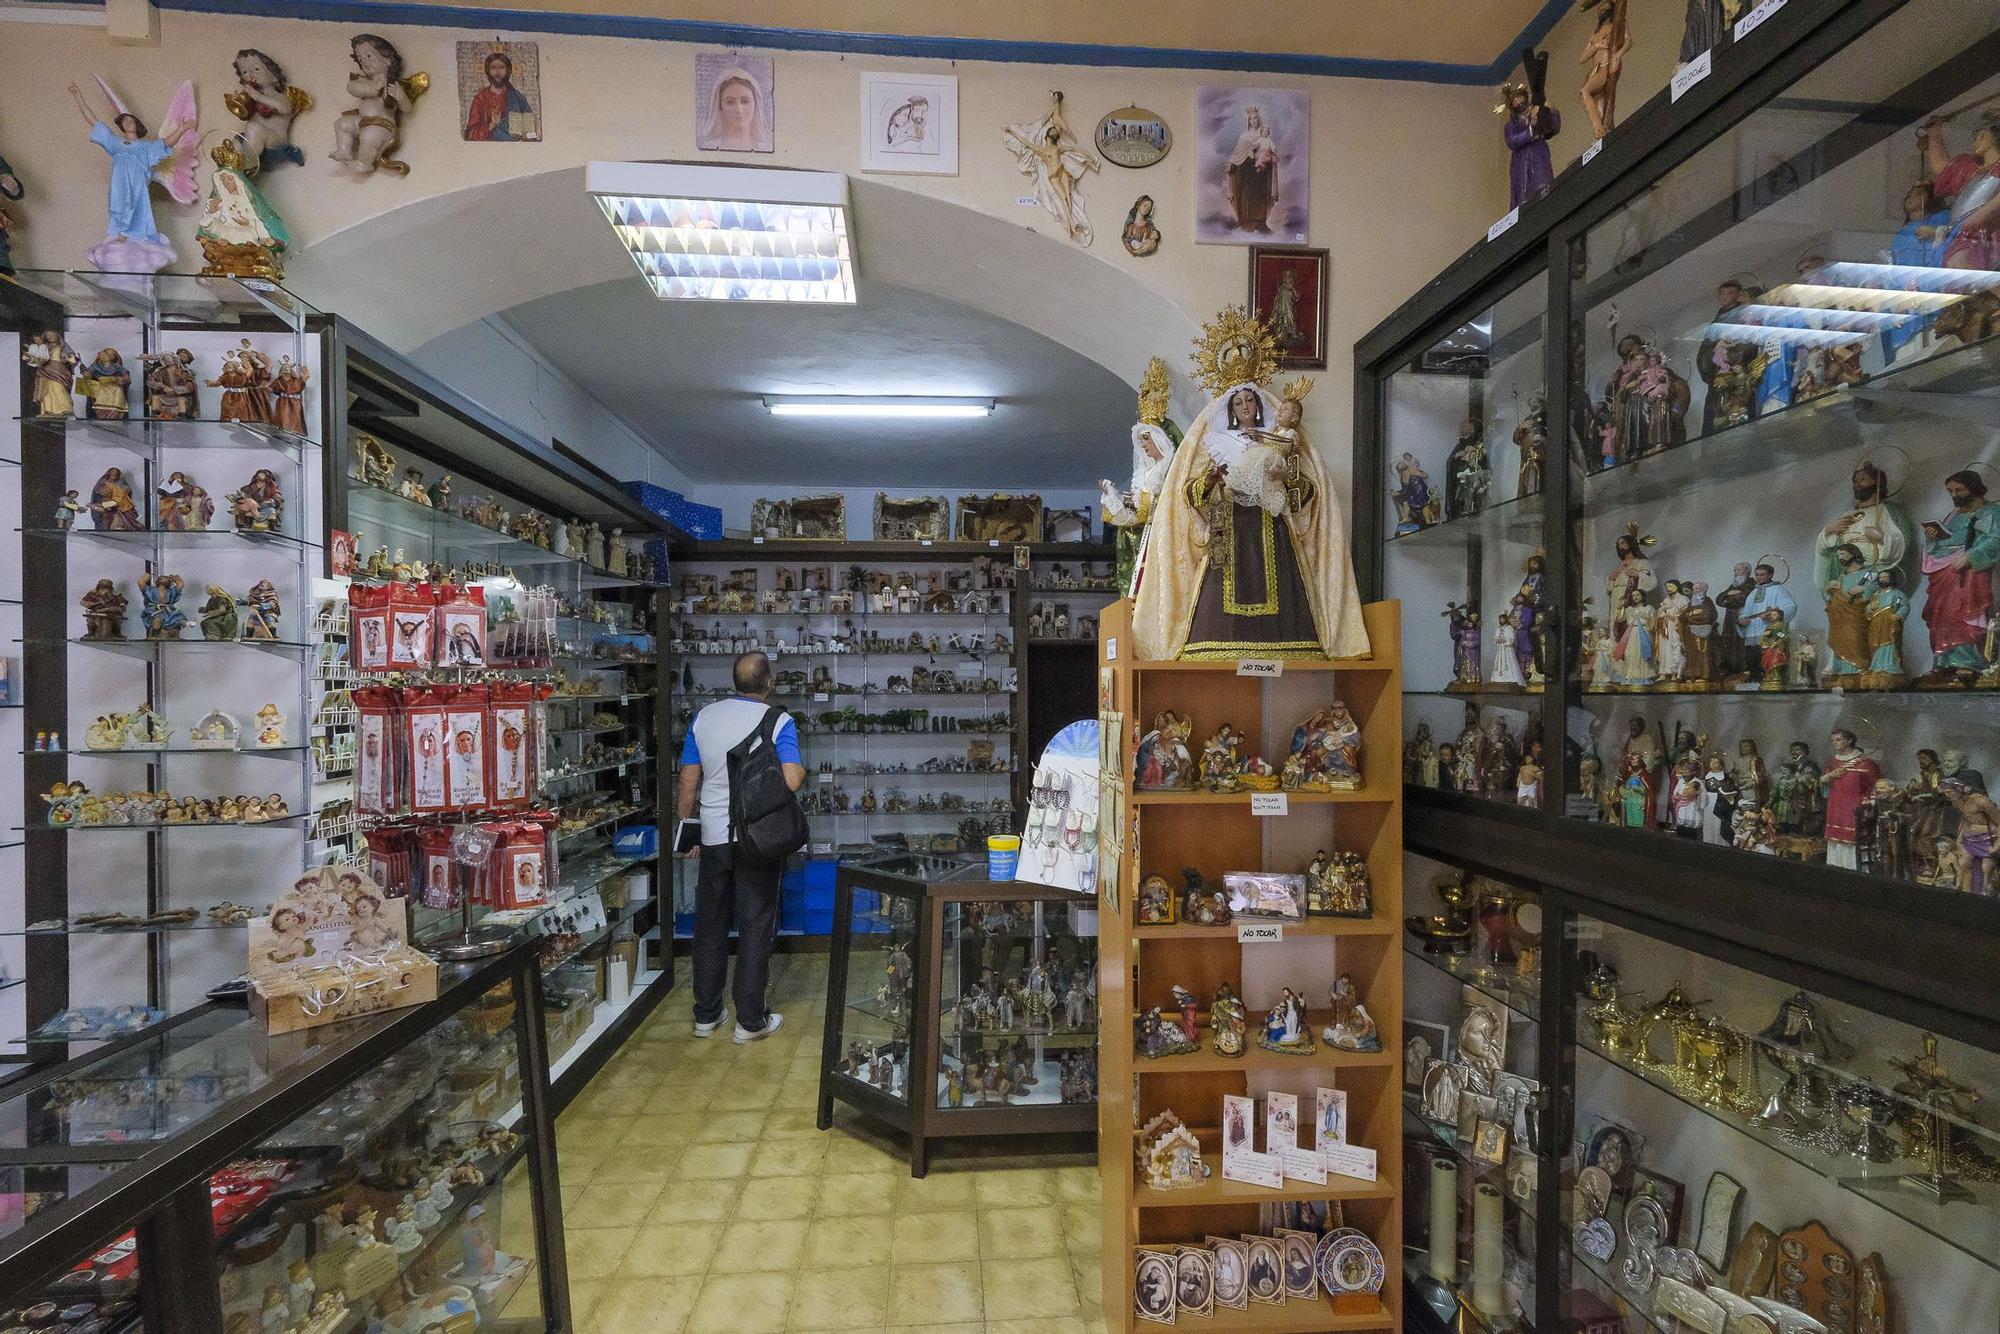 Comercio histórico: Bazar Peregrina